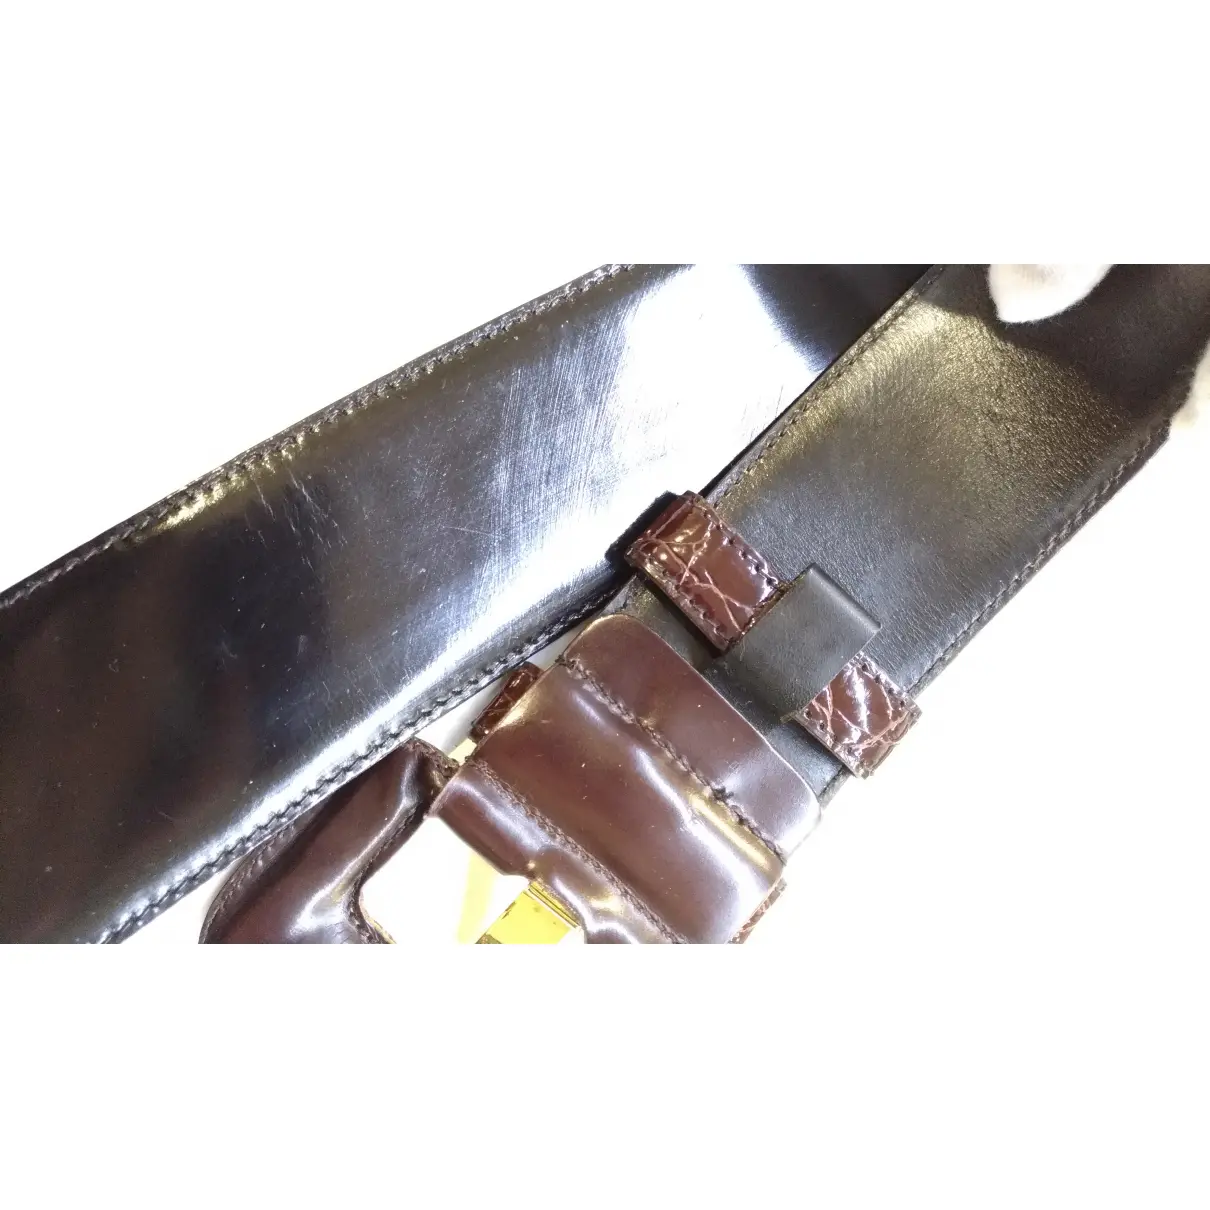 Patent leather belt Prada